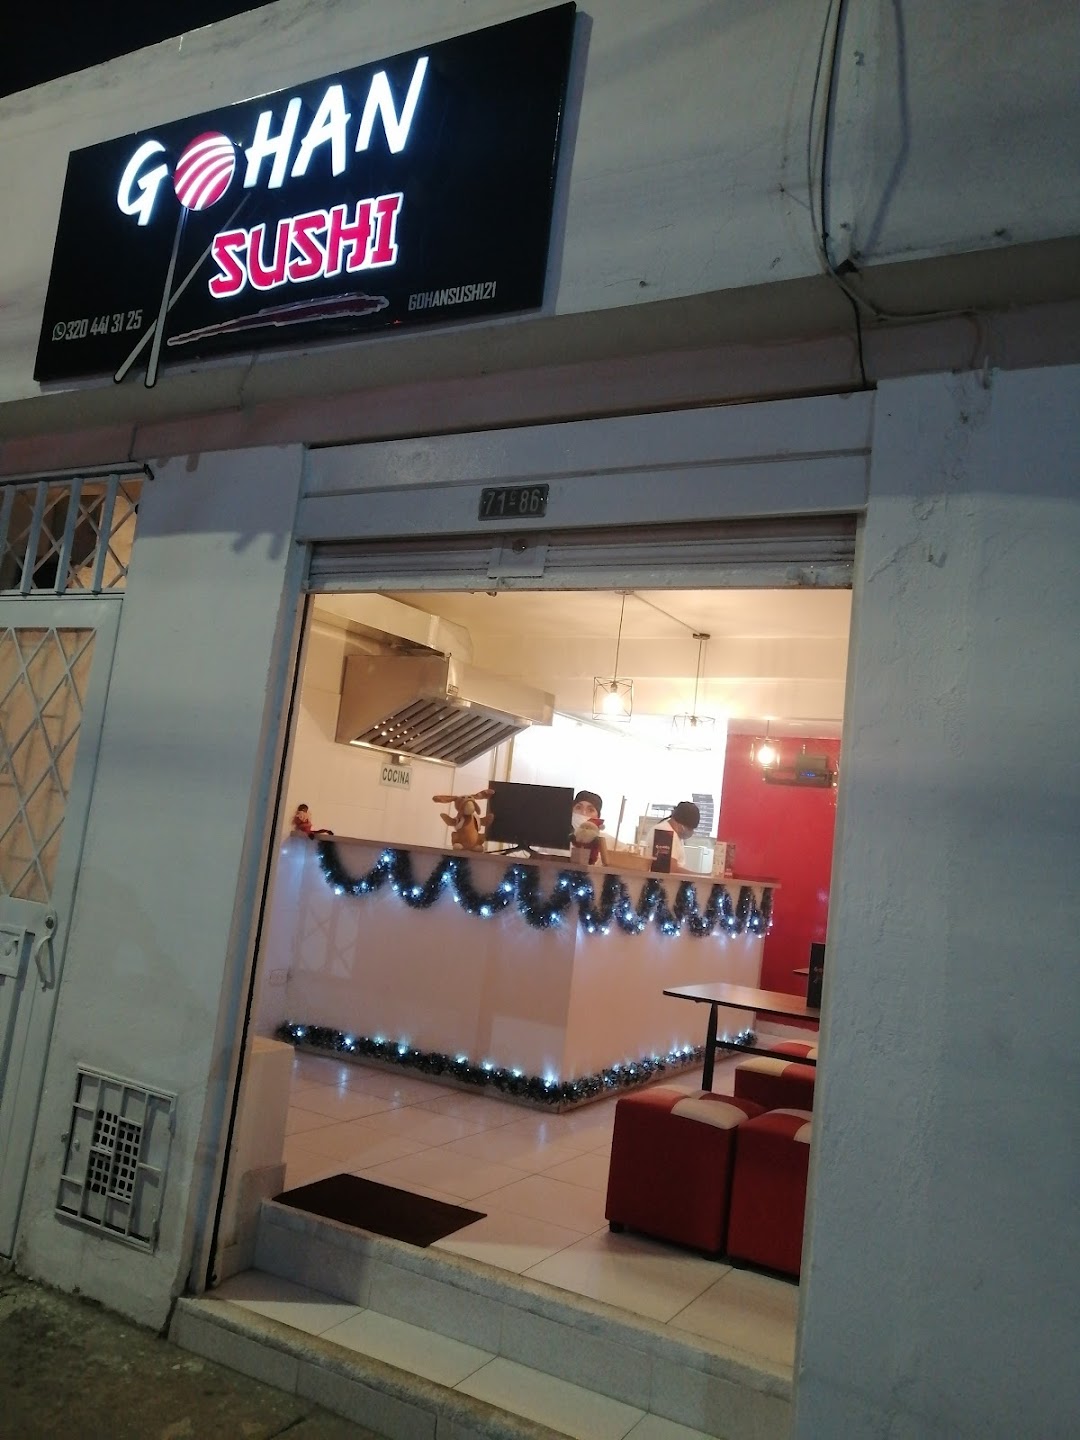 Gohan sushi